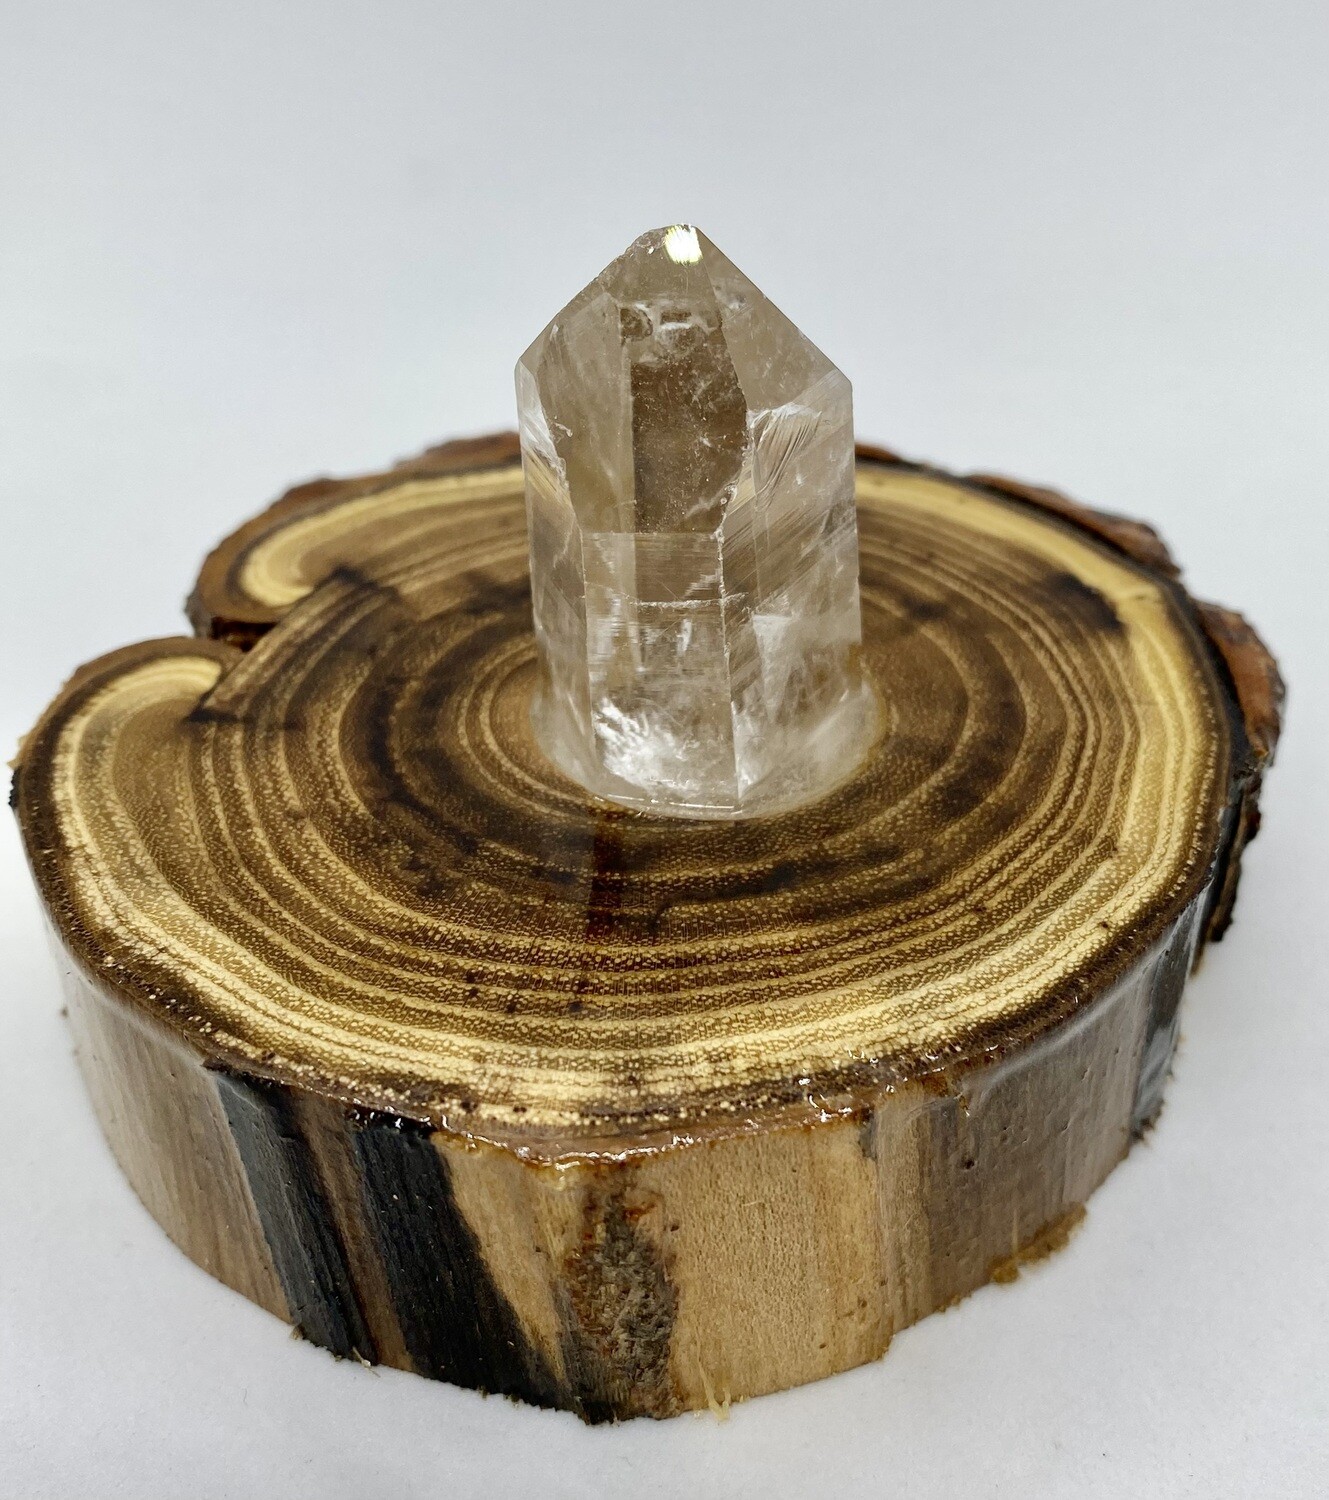 Clear Quartz Crystal in Black Locust Wooden Base